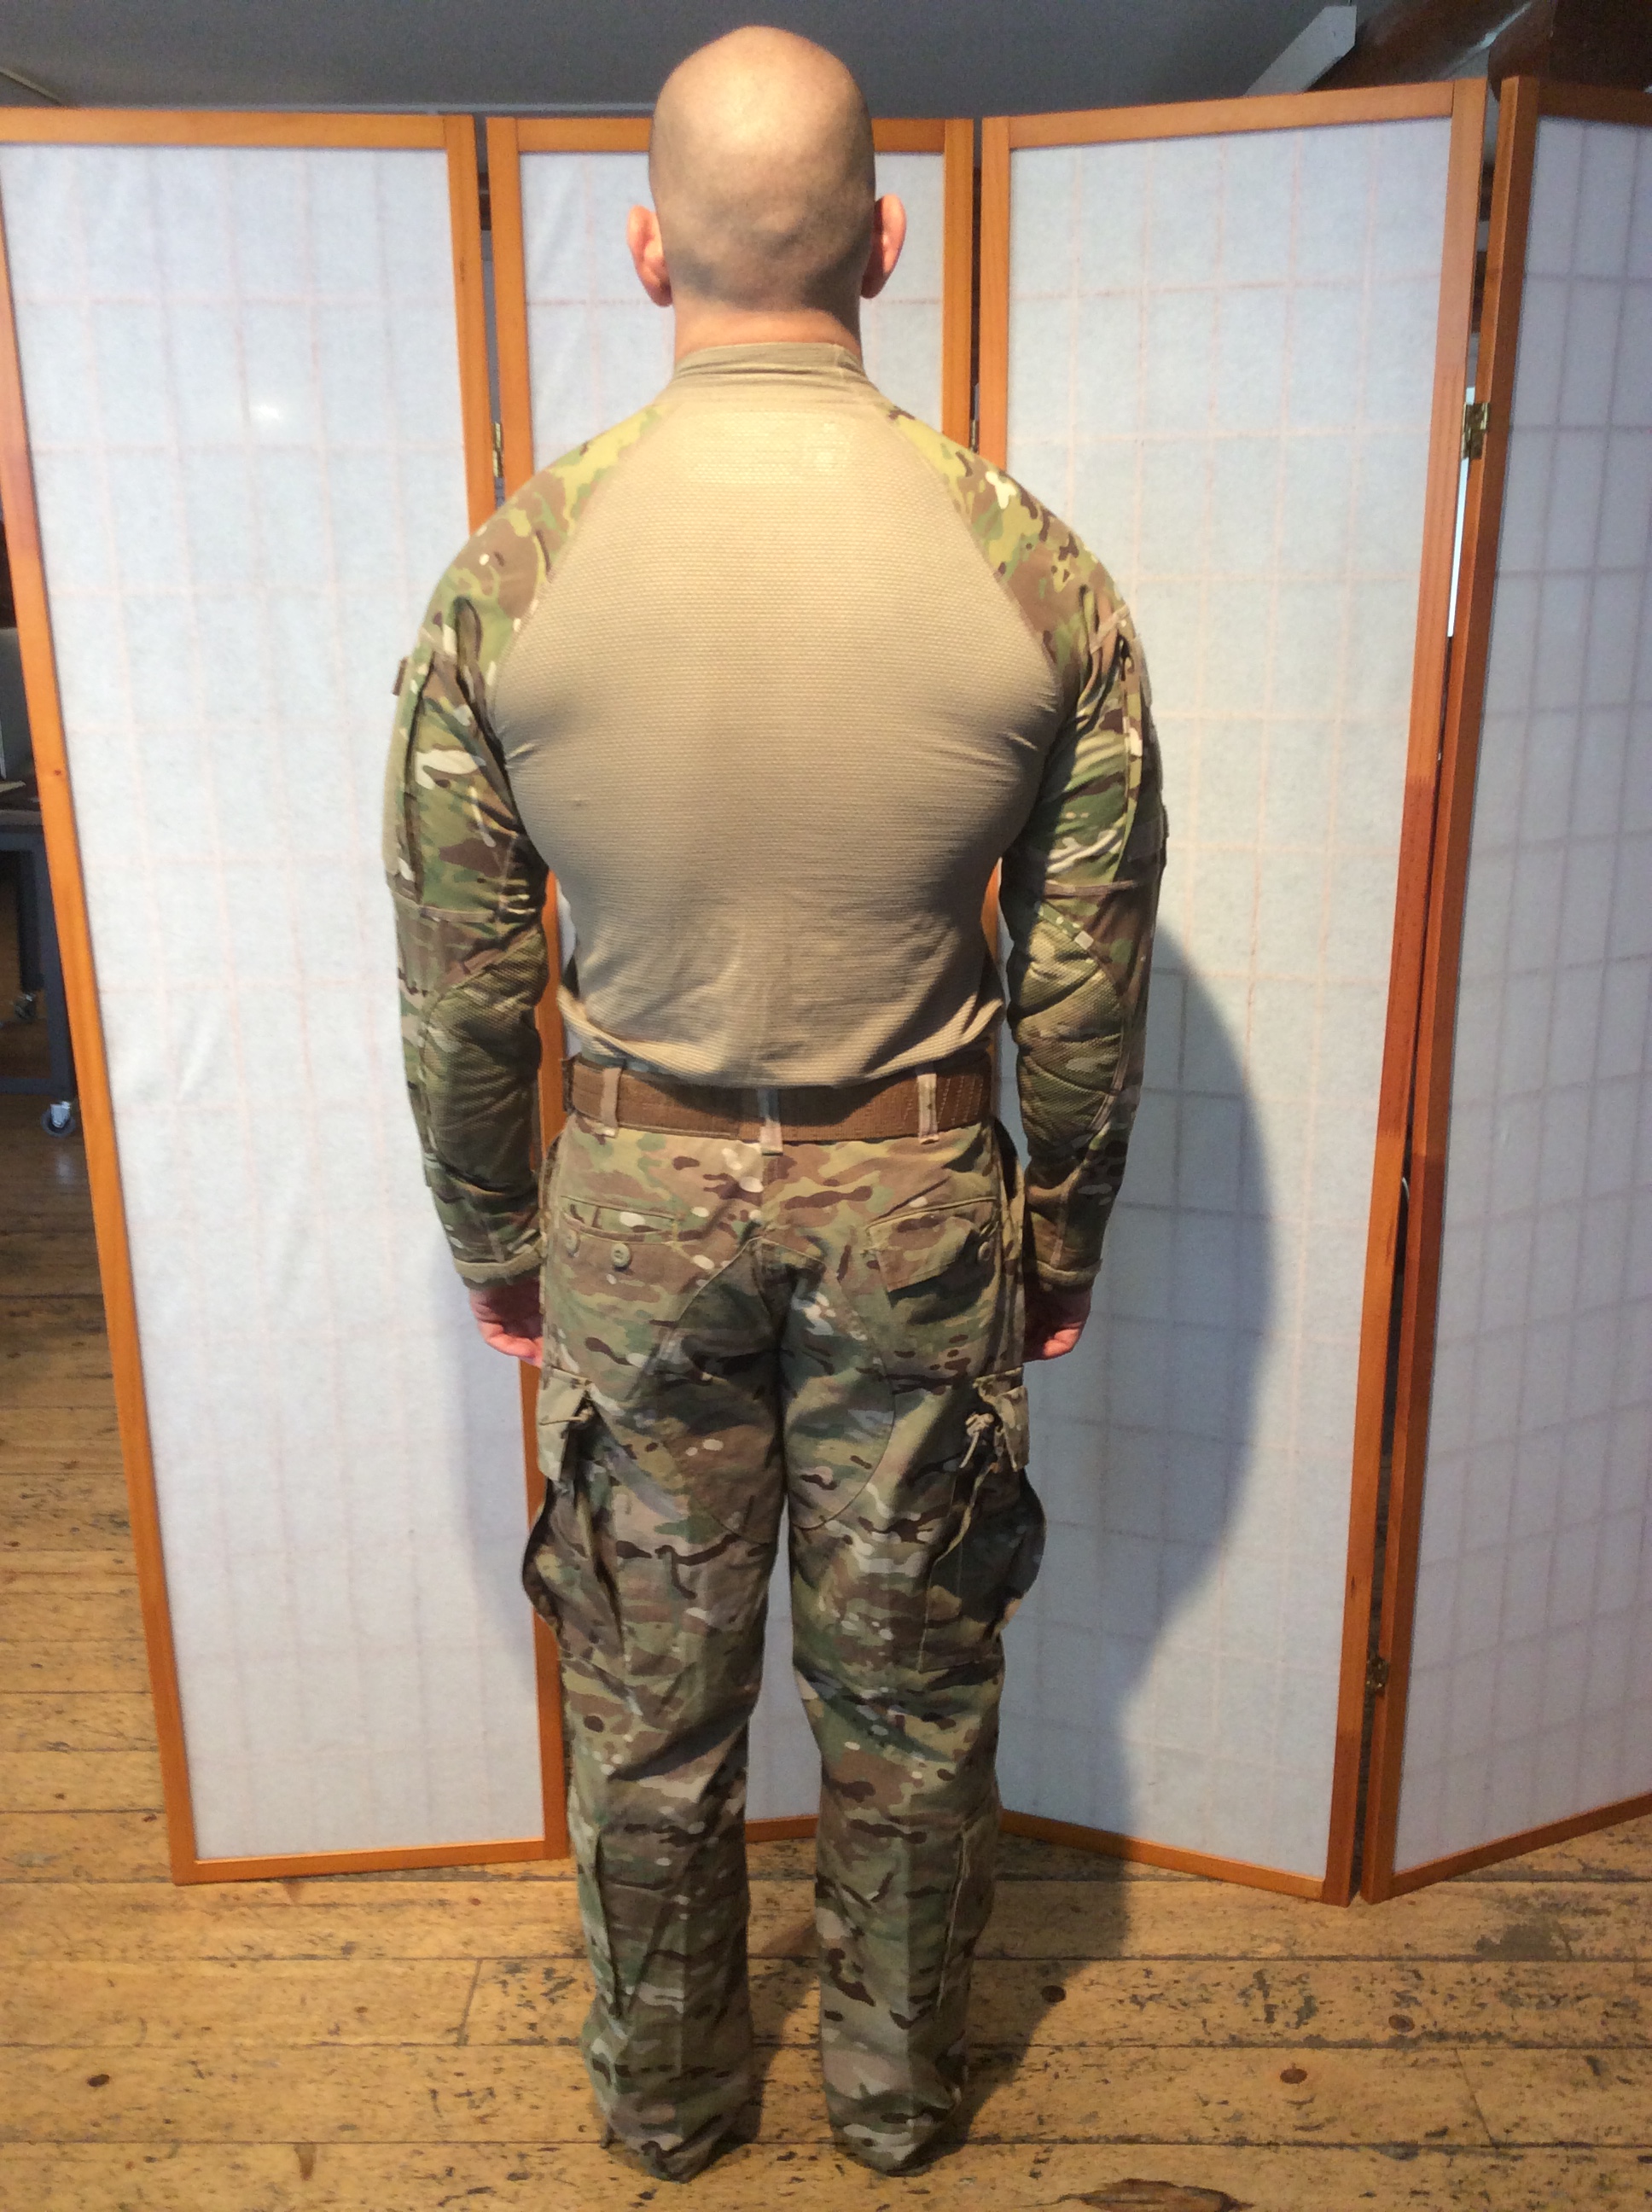 Army Combat Uniform Size Chart